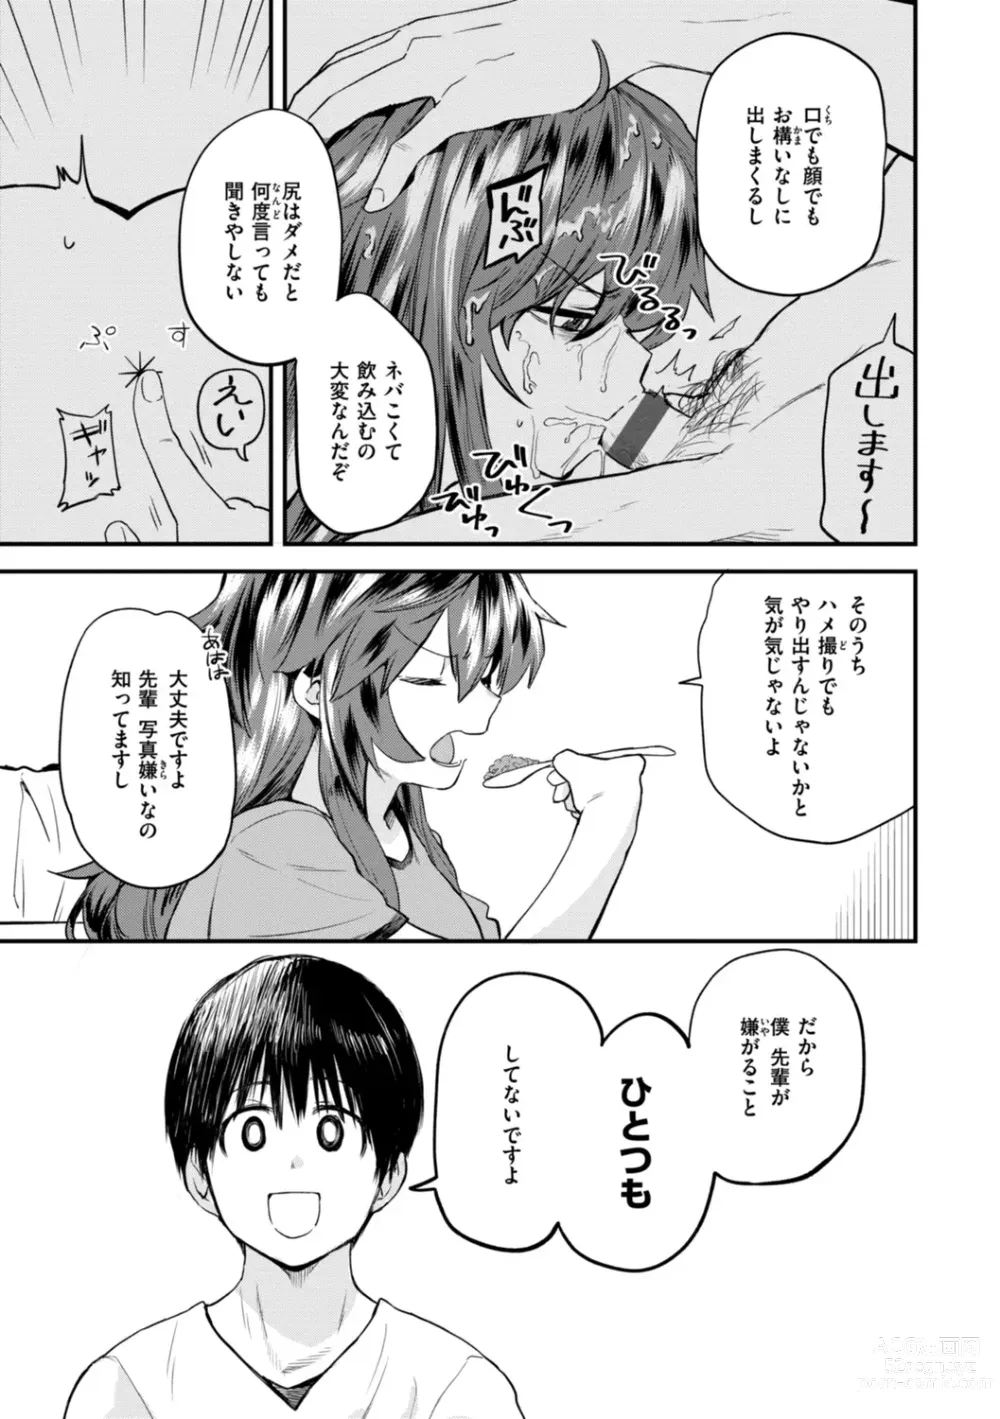 Page 159 of manga Jaa, Ecchi Shichau? - Shall we have H then?